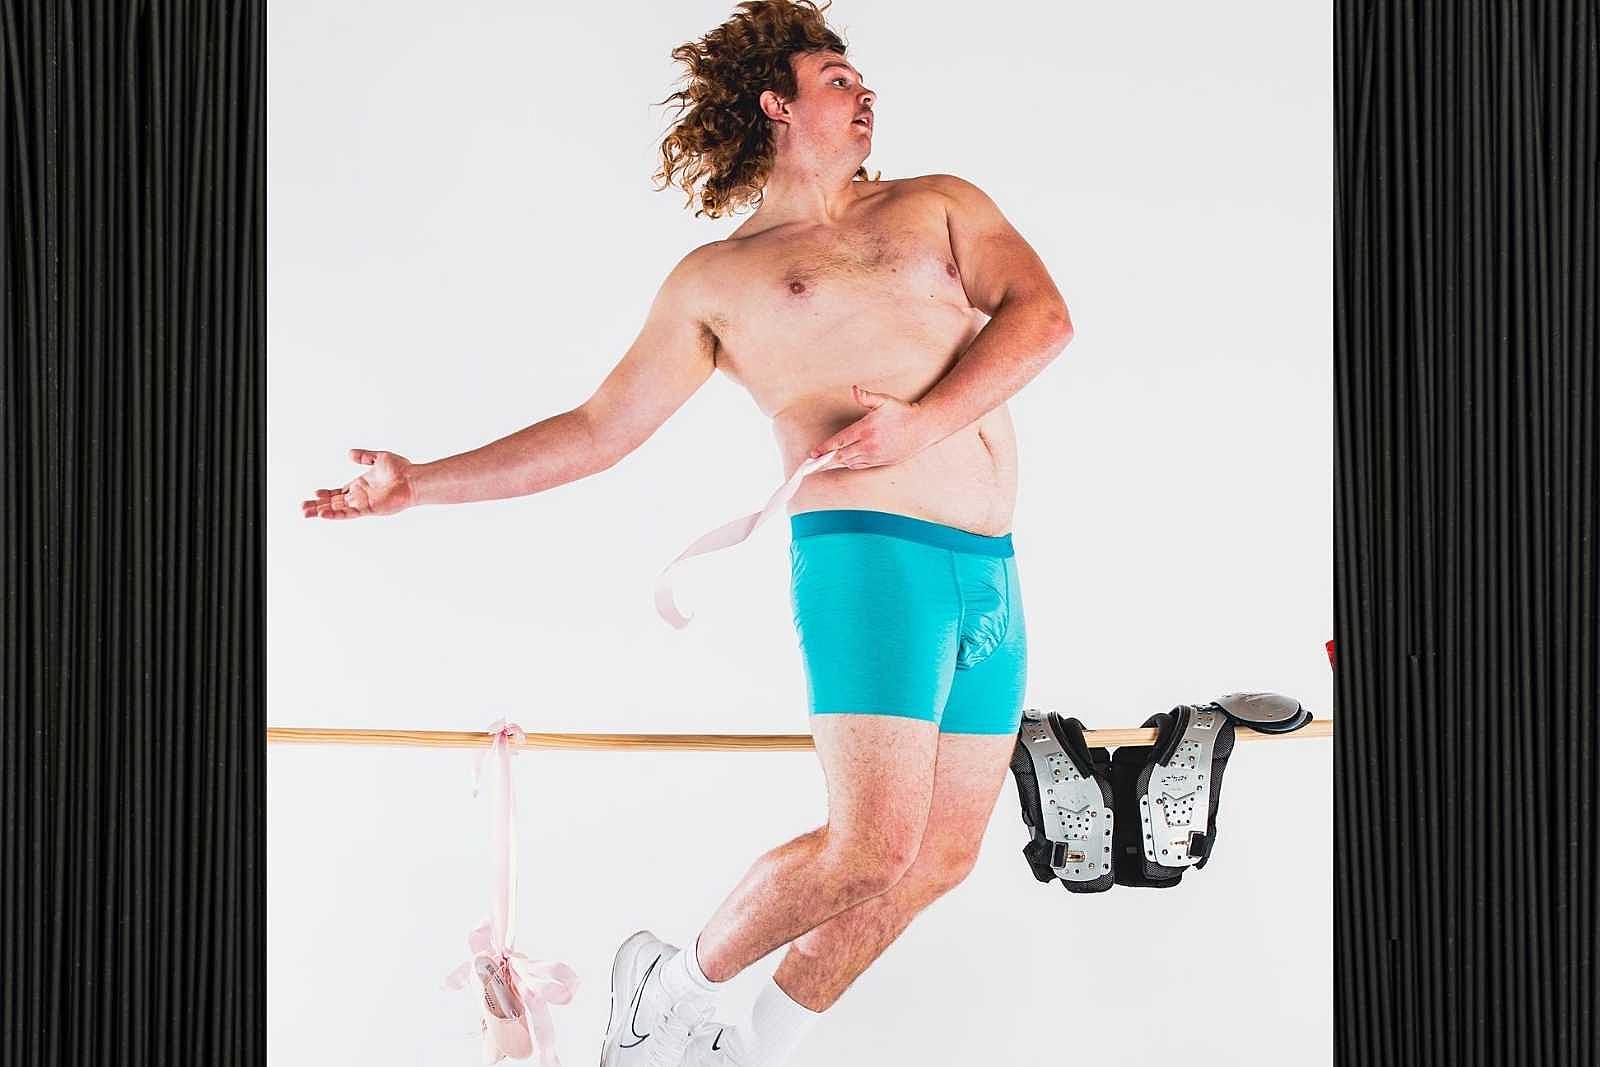 CU Player Sores Comedic Gold With Underwear Endorsement [Photos]